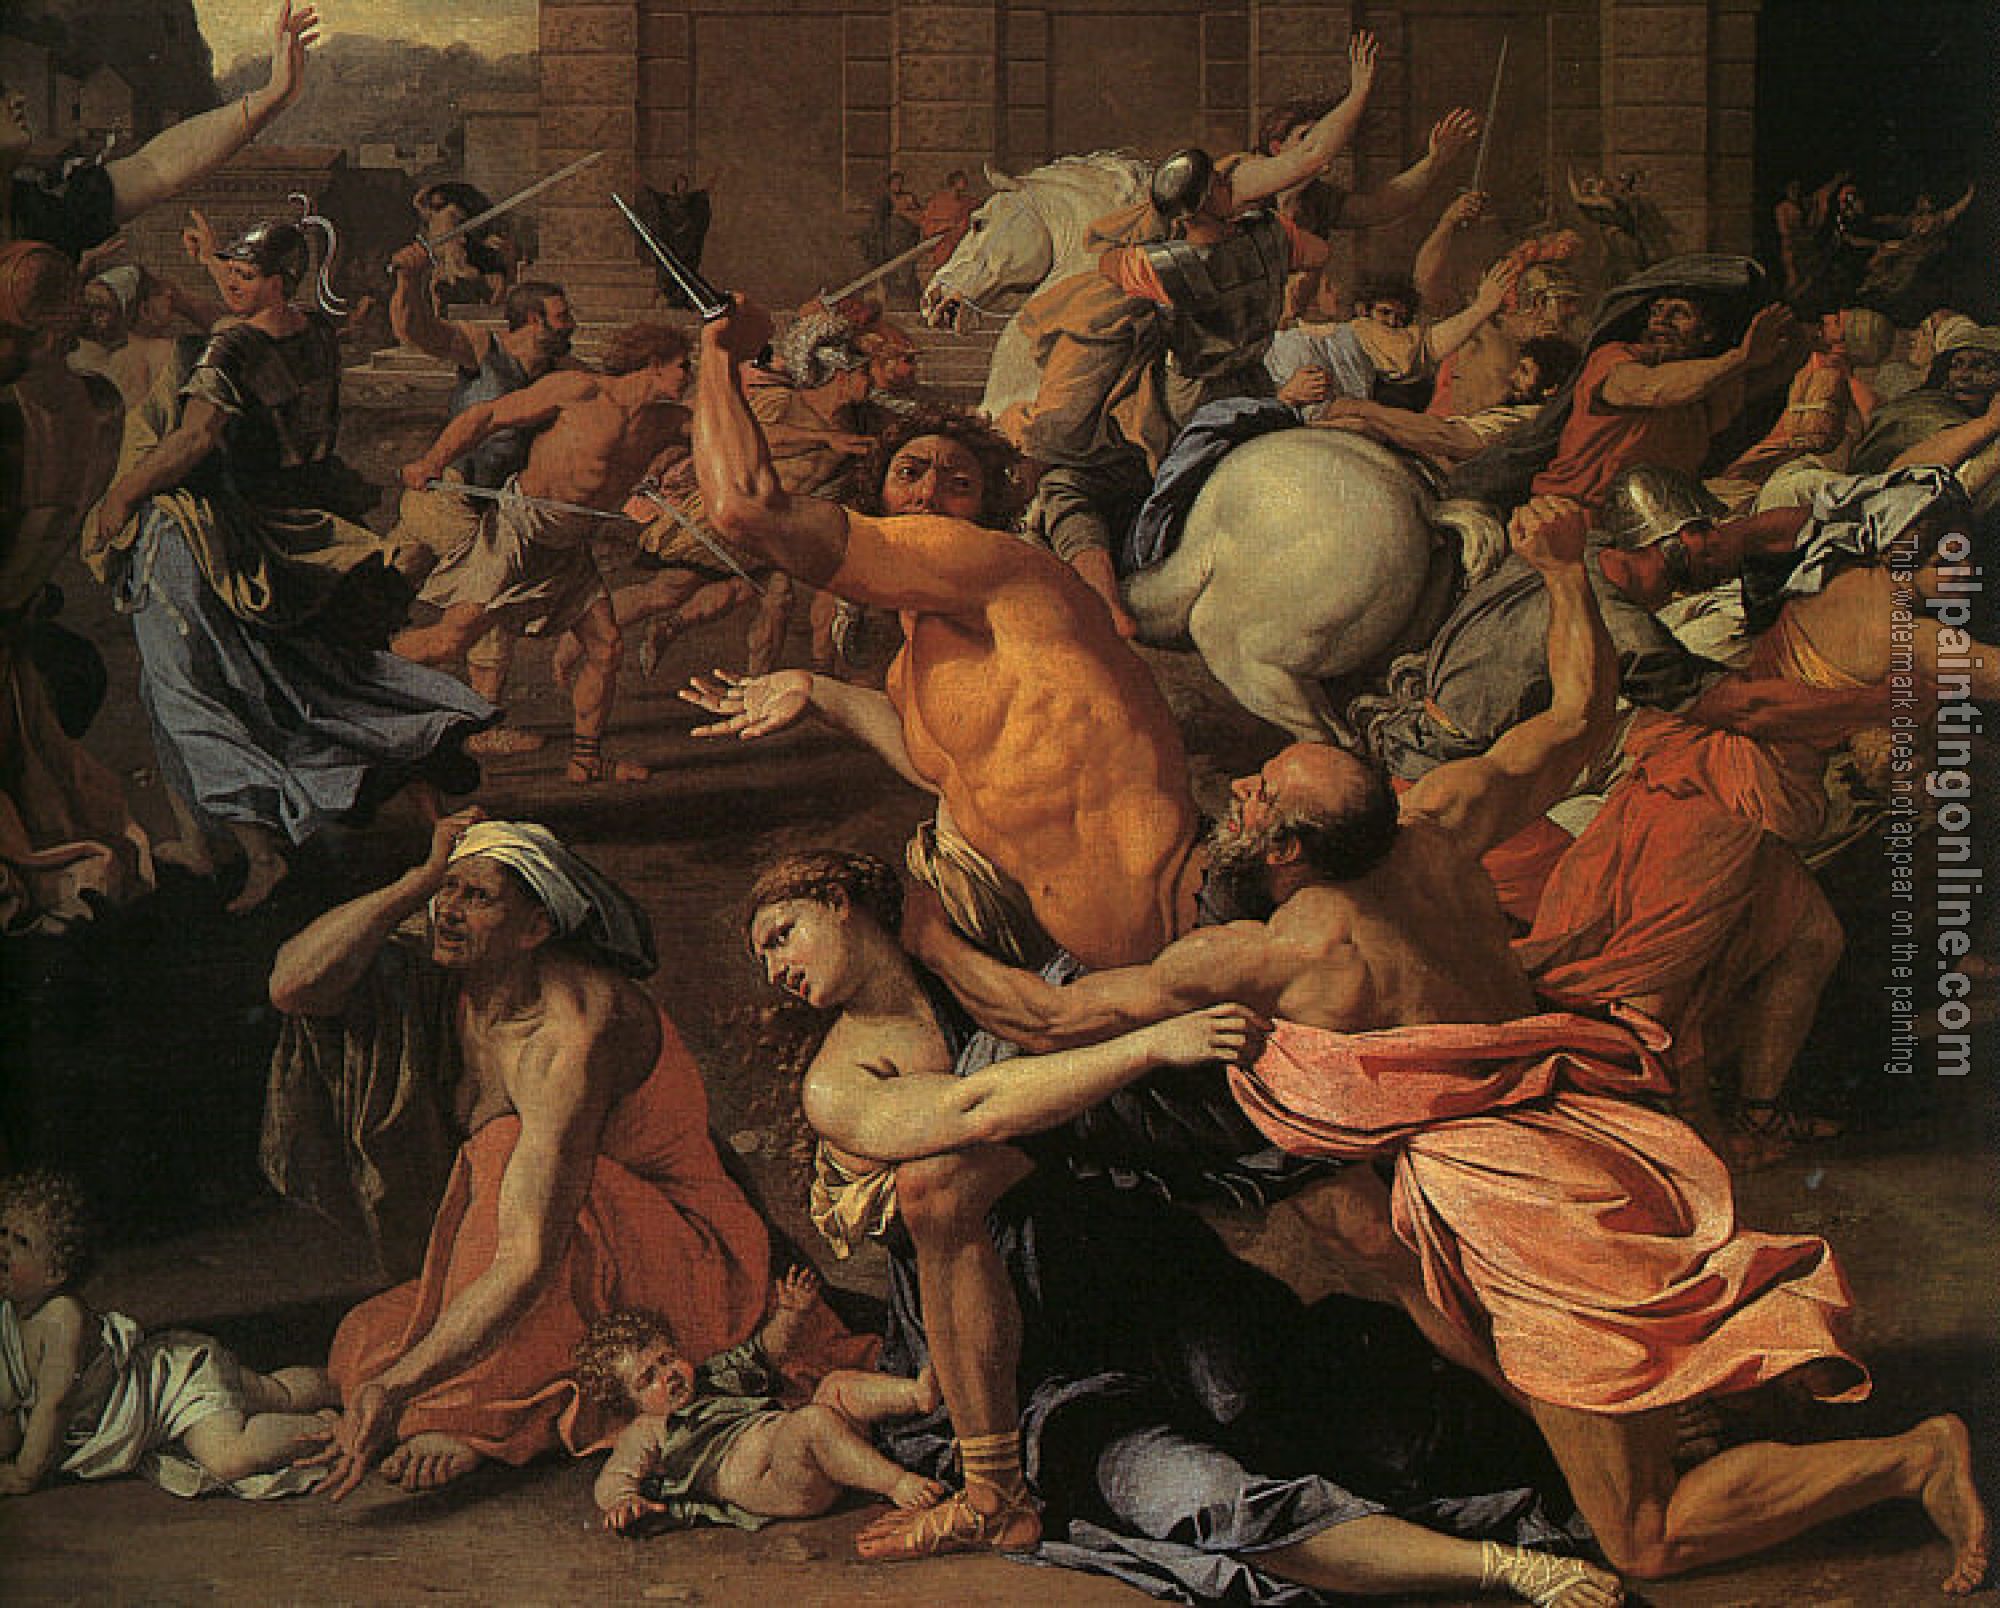 Poussin, Nicolas - The Rape of the Sabine Women